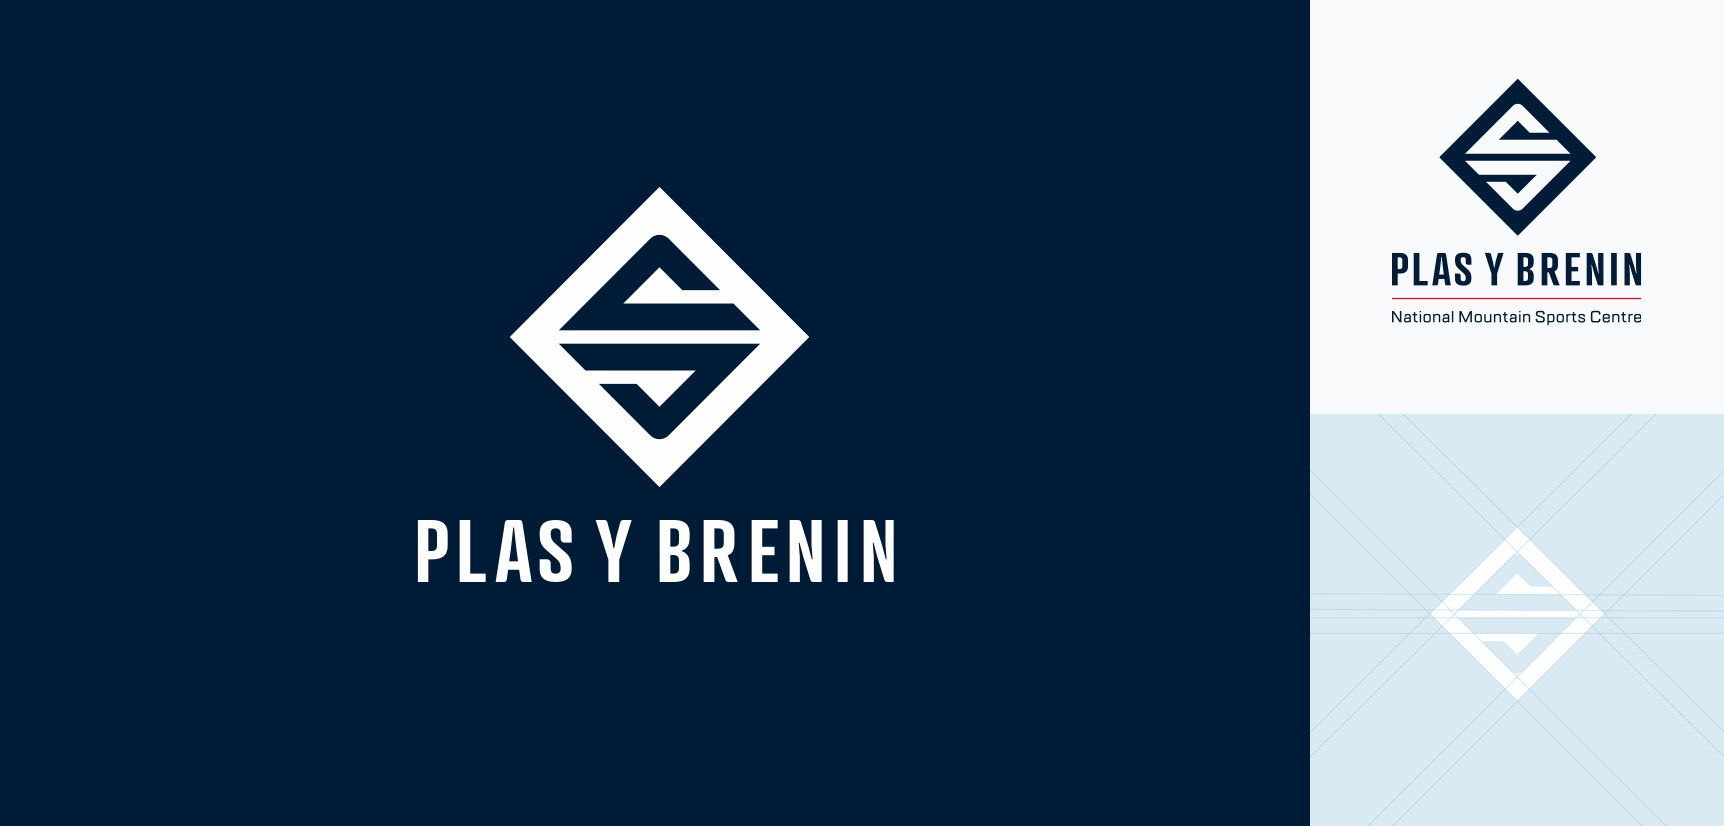 Plas y Brenin (PYB) logos